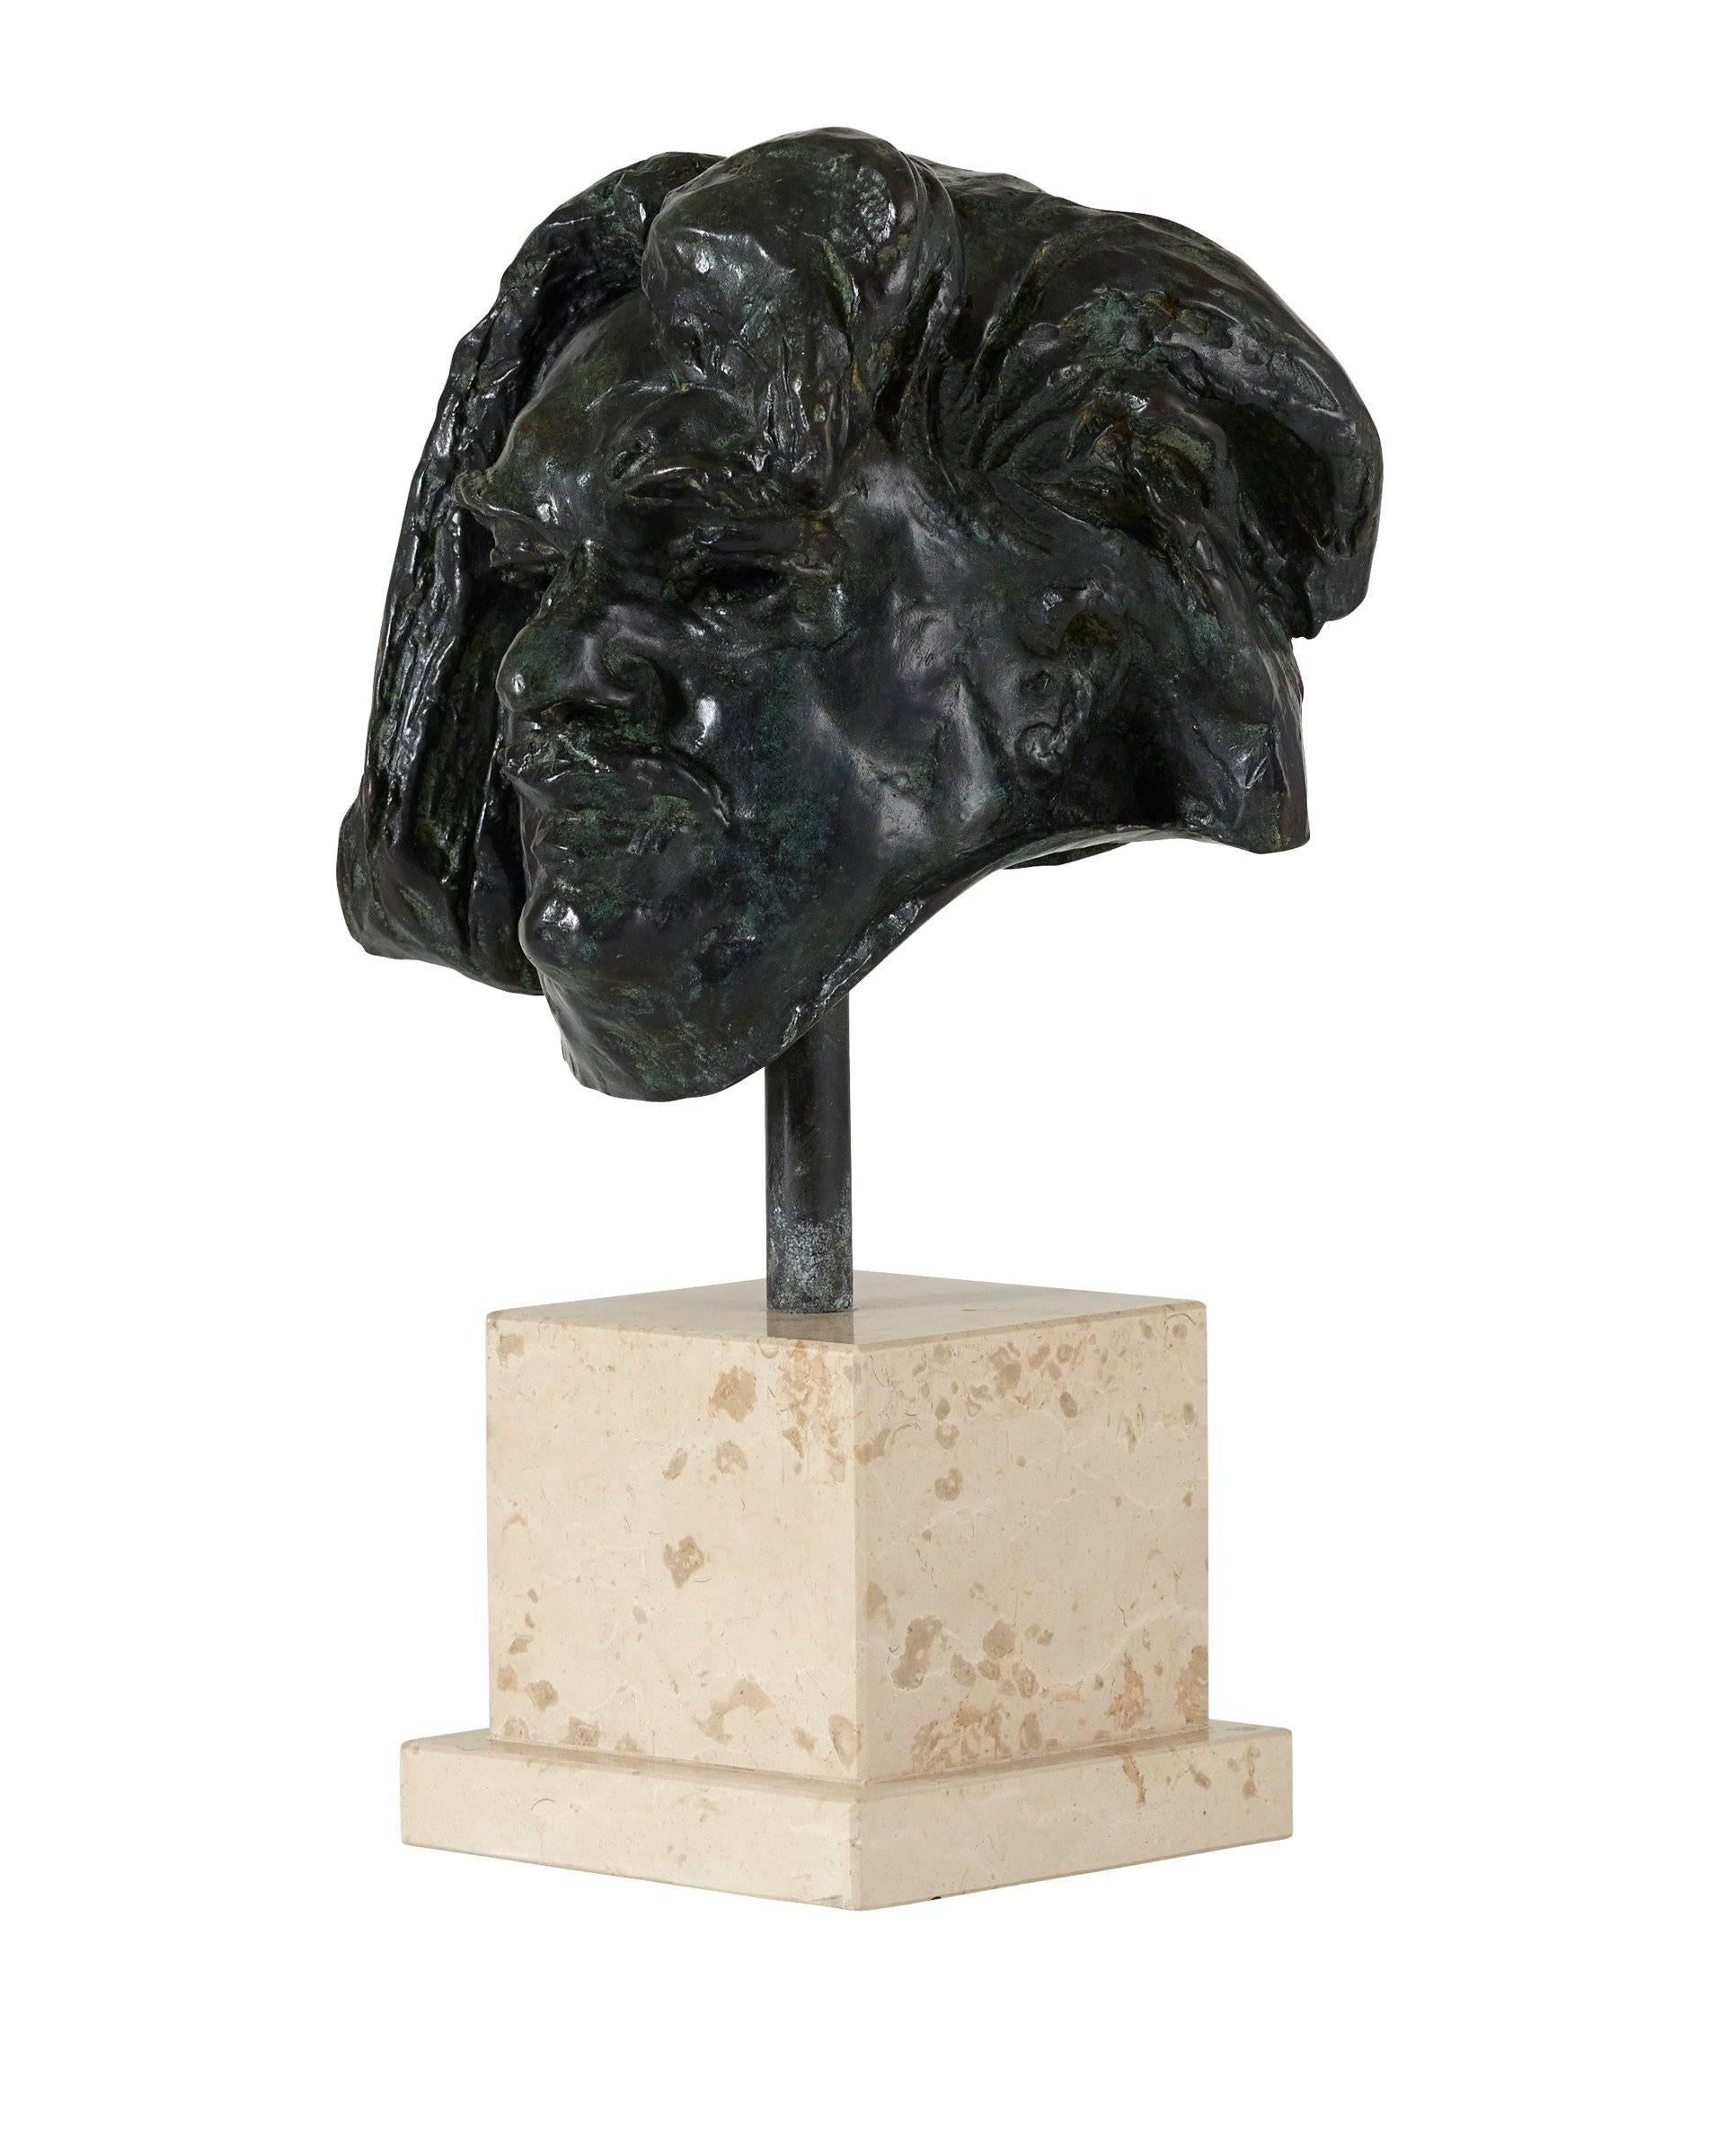 Head of Balzac - Sculpture by Auguste Rodin